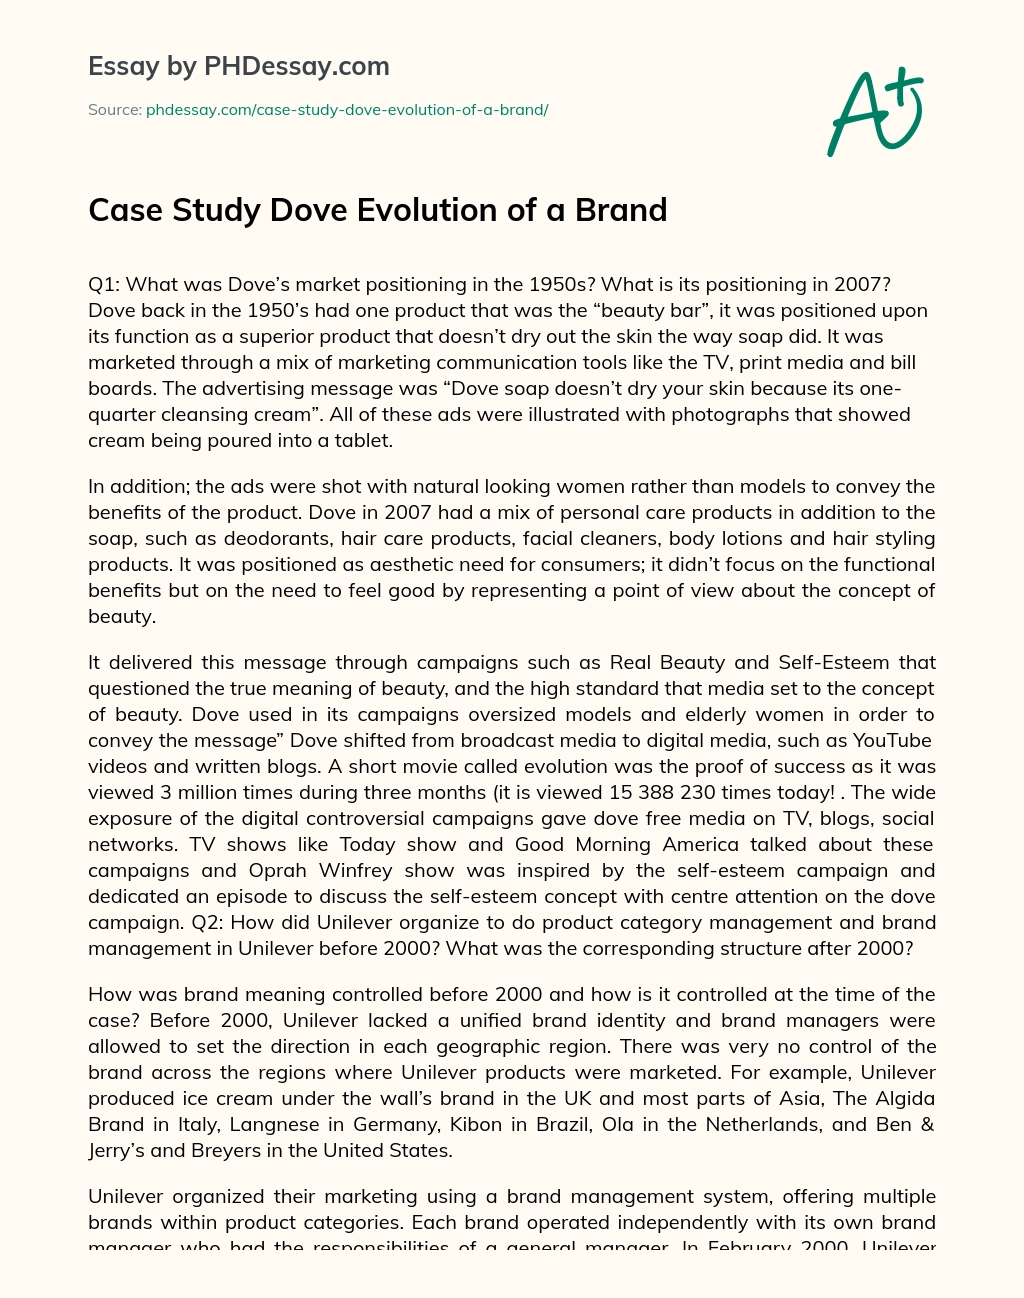 Case Study Dove Evolution of a Brand essay